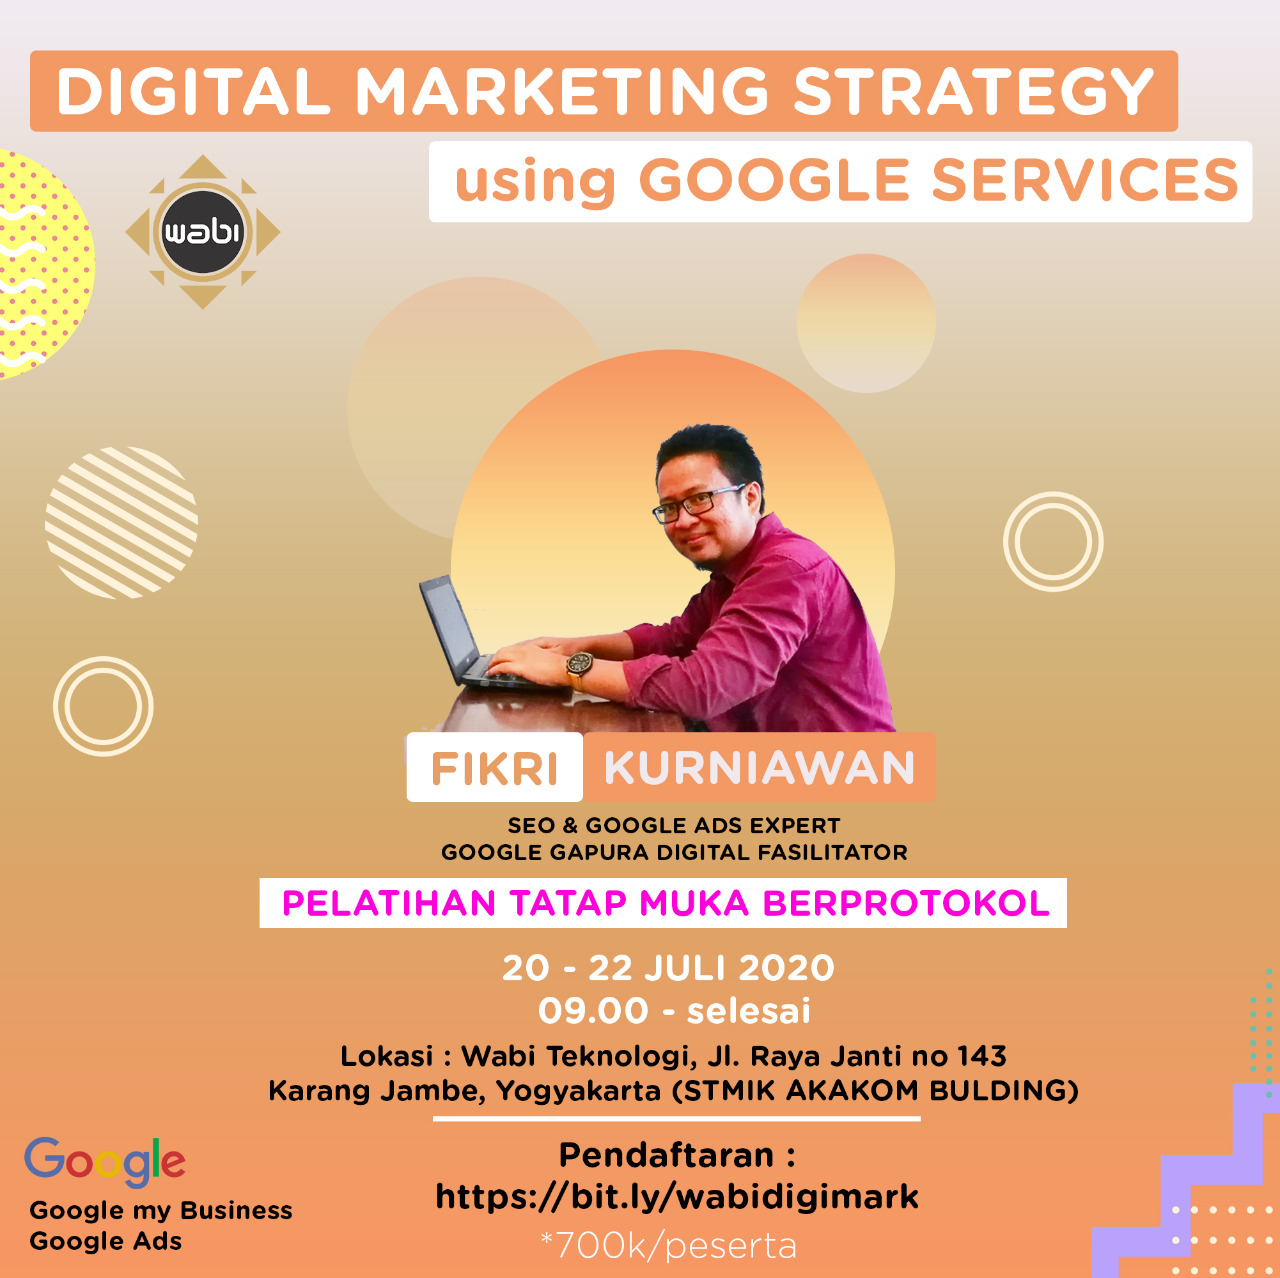 Digital Marketing Strategy using Google Services